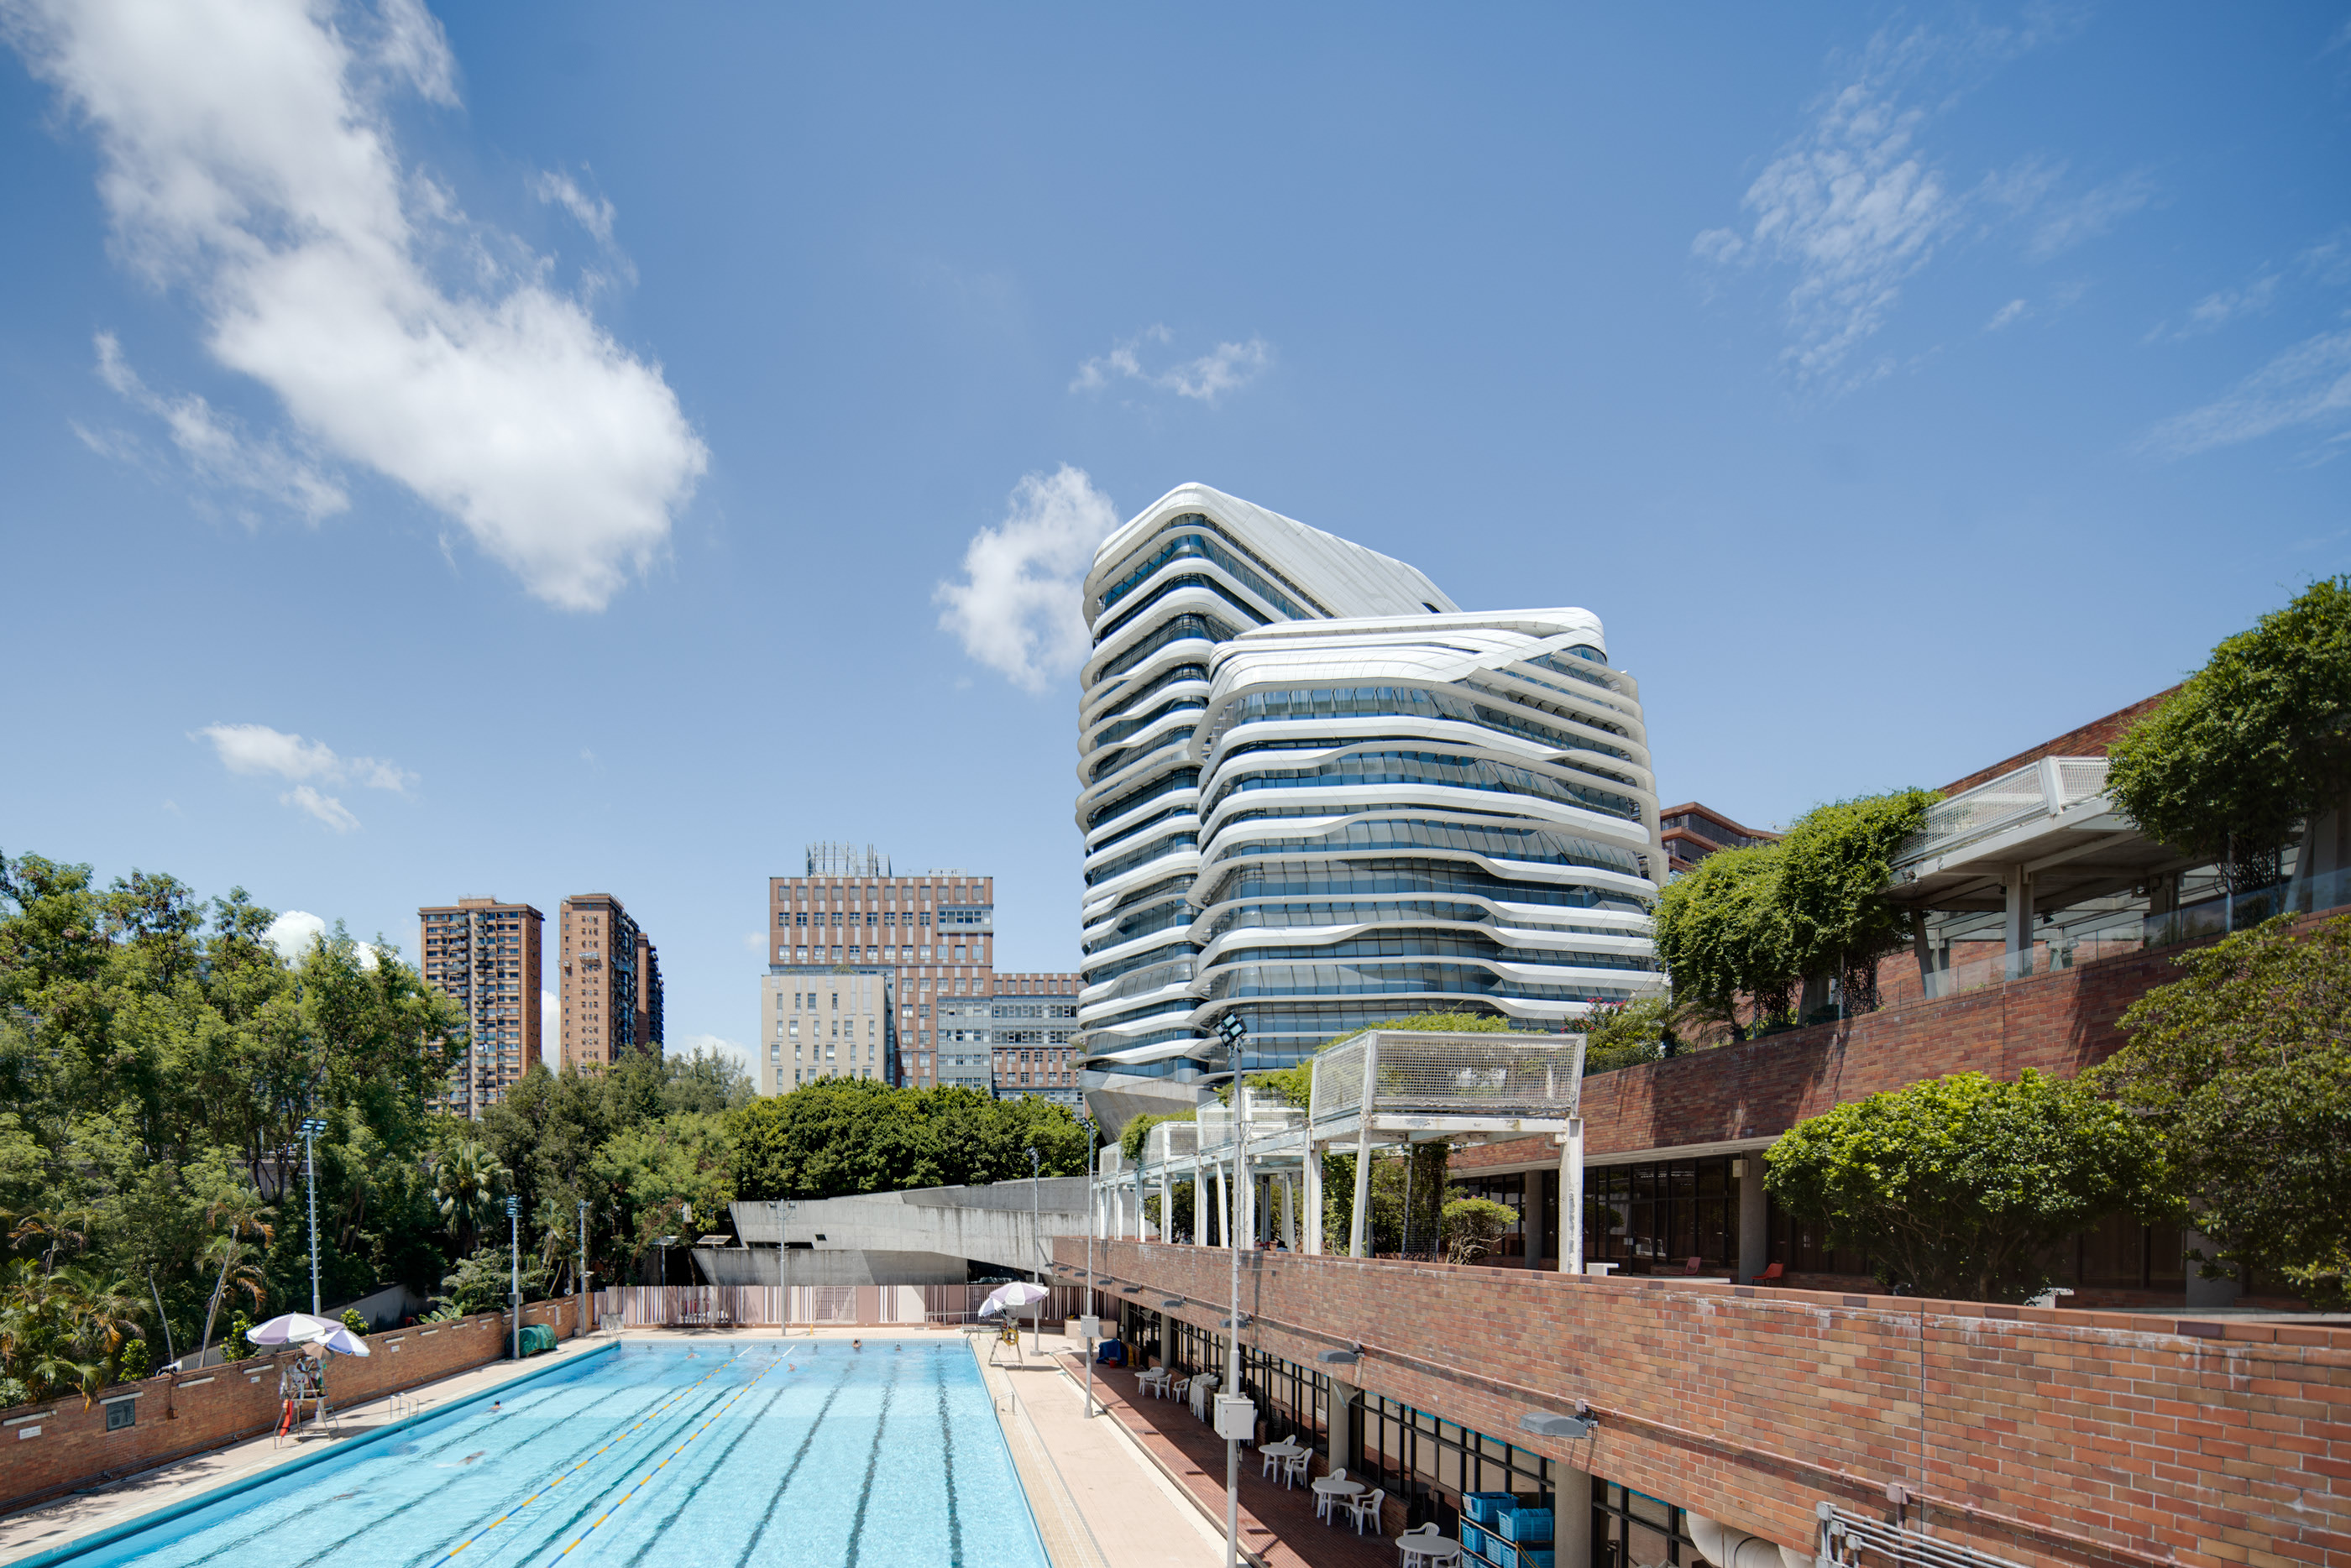 Zaha Hadid Architect's Amazingness Innovation Tower - Architecture Photography